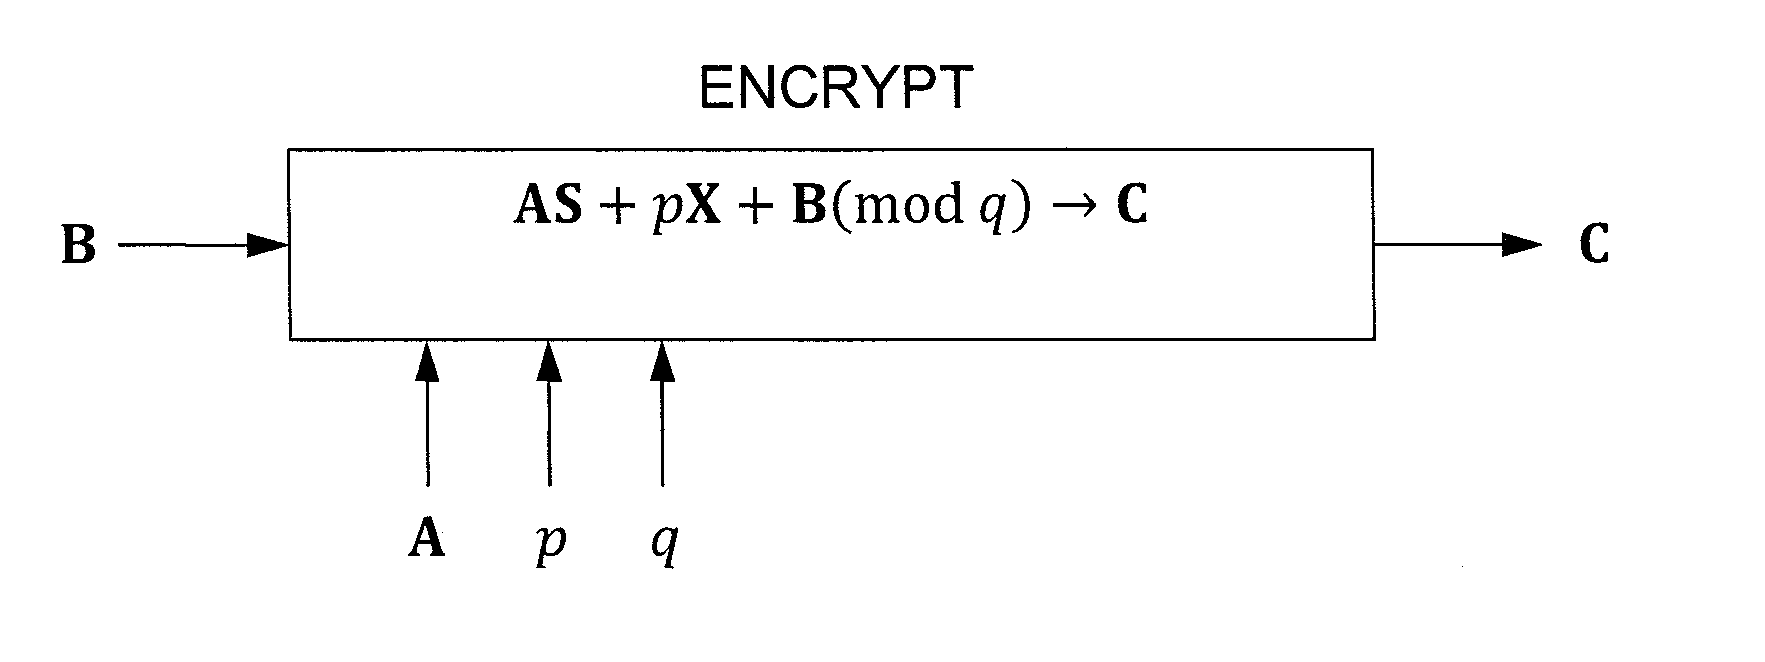 Efficient homomorphic encryption scheme for bilinear forms